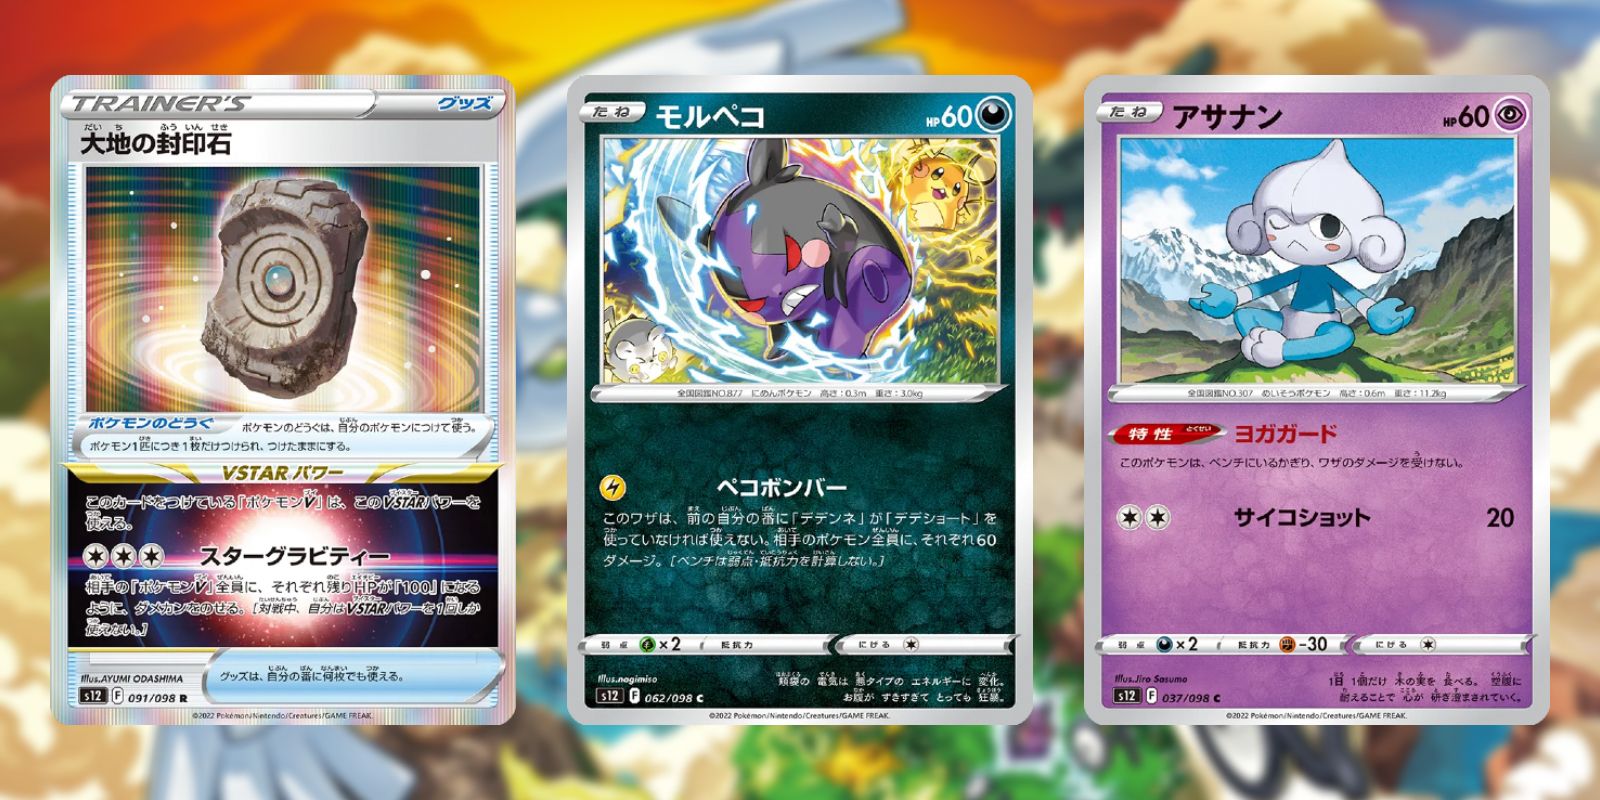 Every Card Revealed For Pokémon TCG's Japanese Paradigm Trigger Set